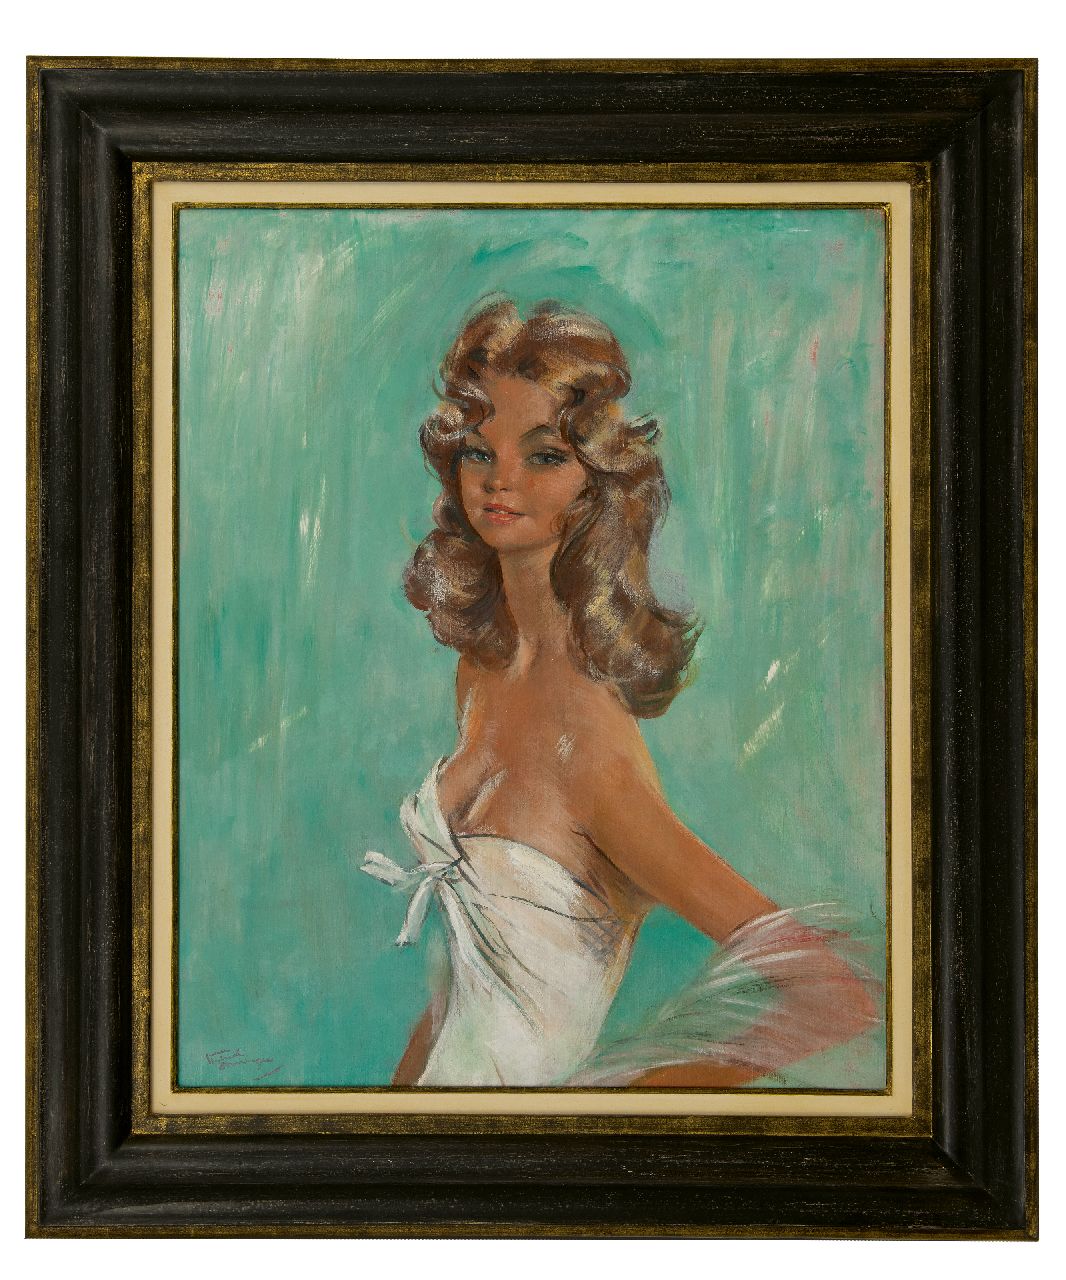 Domergue J.G.  | Jean-Gabriel Domergue | Schilderijen te koop aangeboden | Blond meisje in witte jurk, olieverf op doek 81,0 x 65,0 cm, gesigneerd linksonder